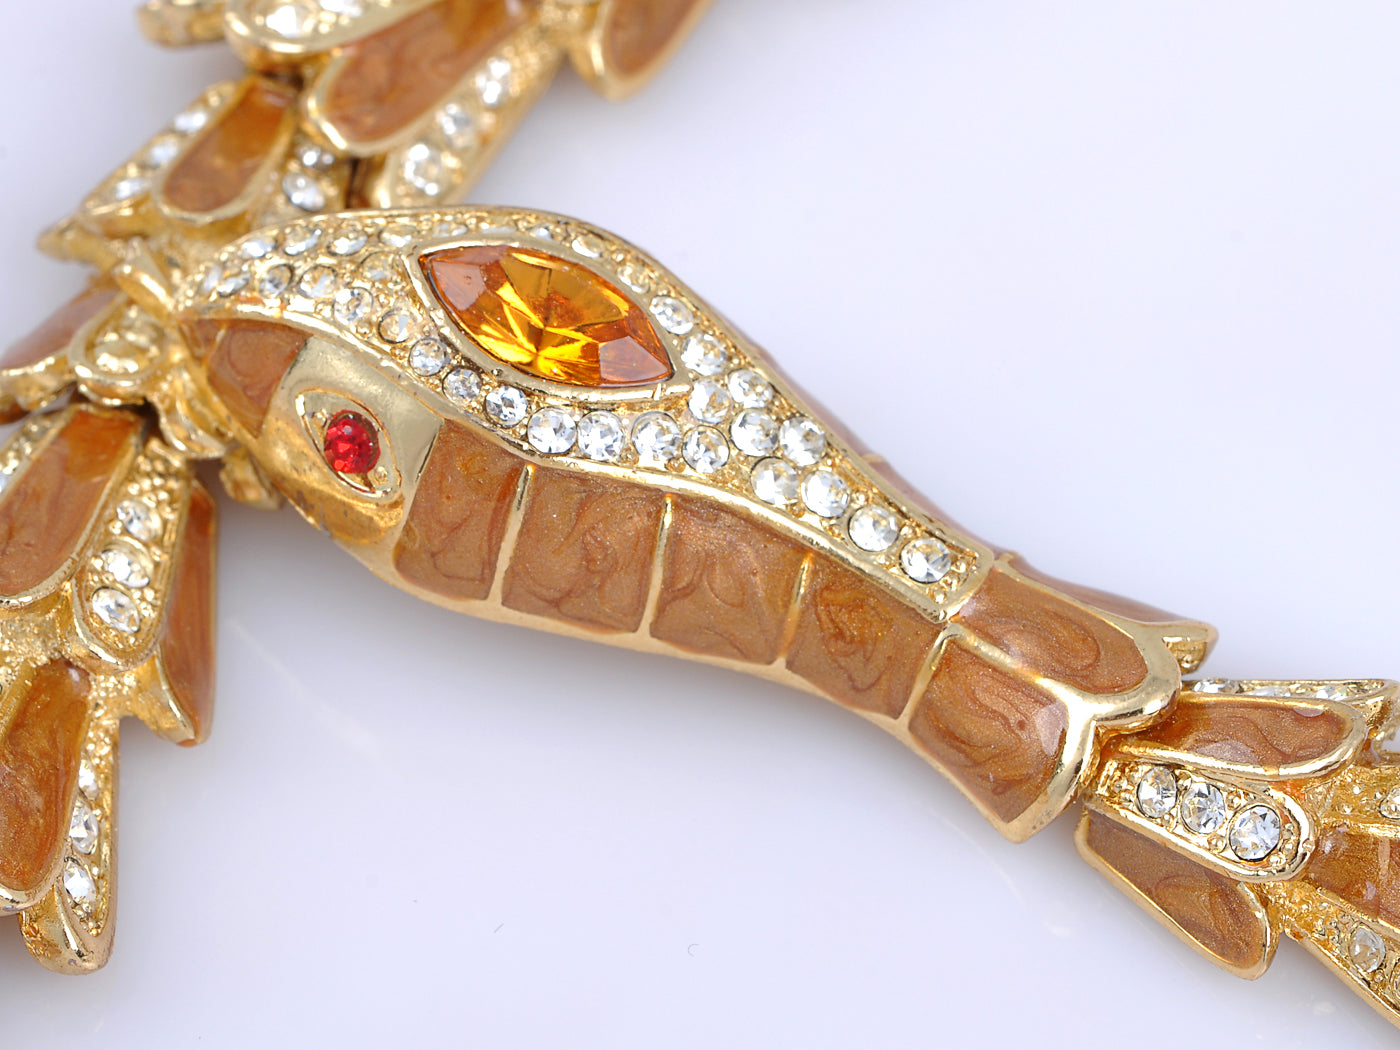 Swarovski Crystal Topaz Rattlesnake Bites Own Tail Necklace Earring Set